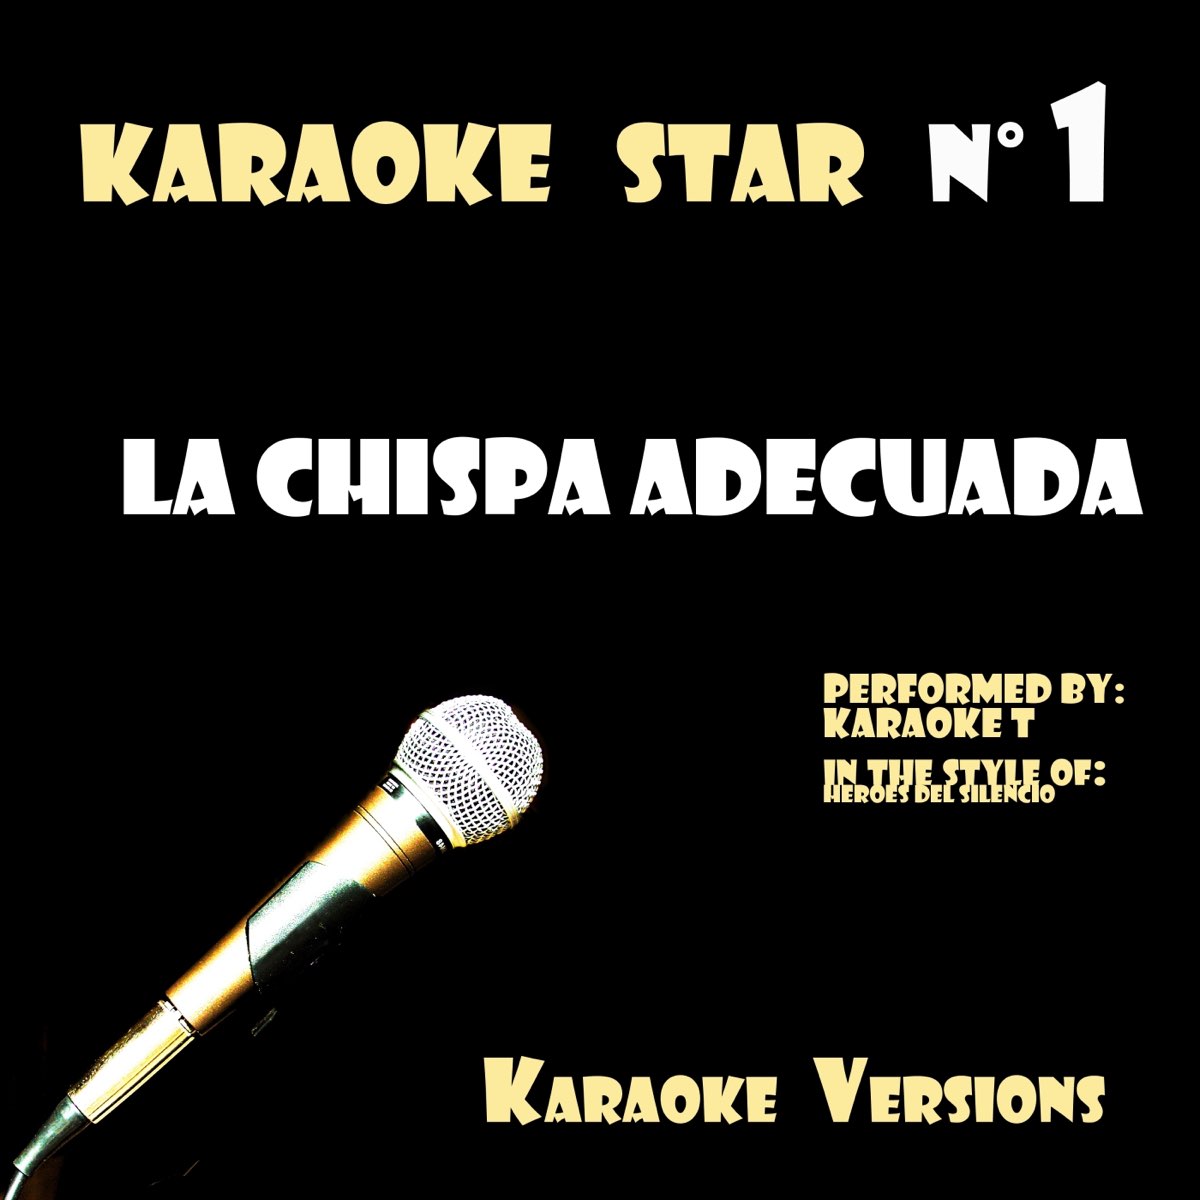 La Chispa Adecuada (in the style of Heroes Del Silencio) [Karaoke Versions]  - EP par Karaoke T sur Apple Music